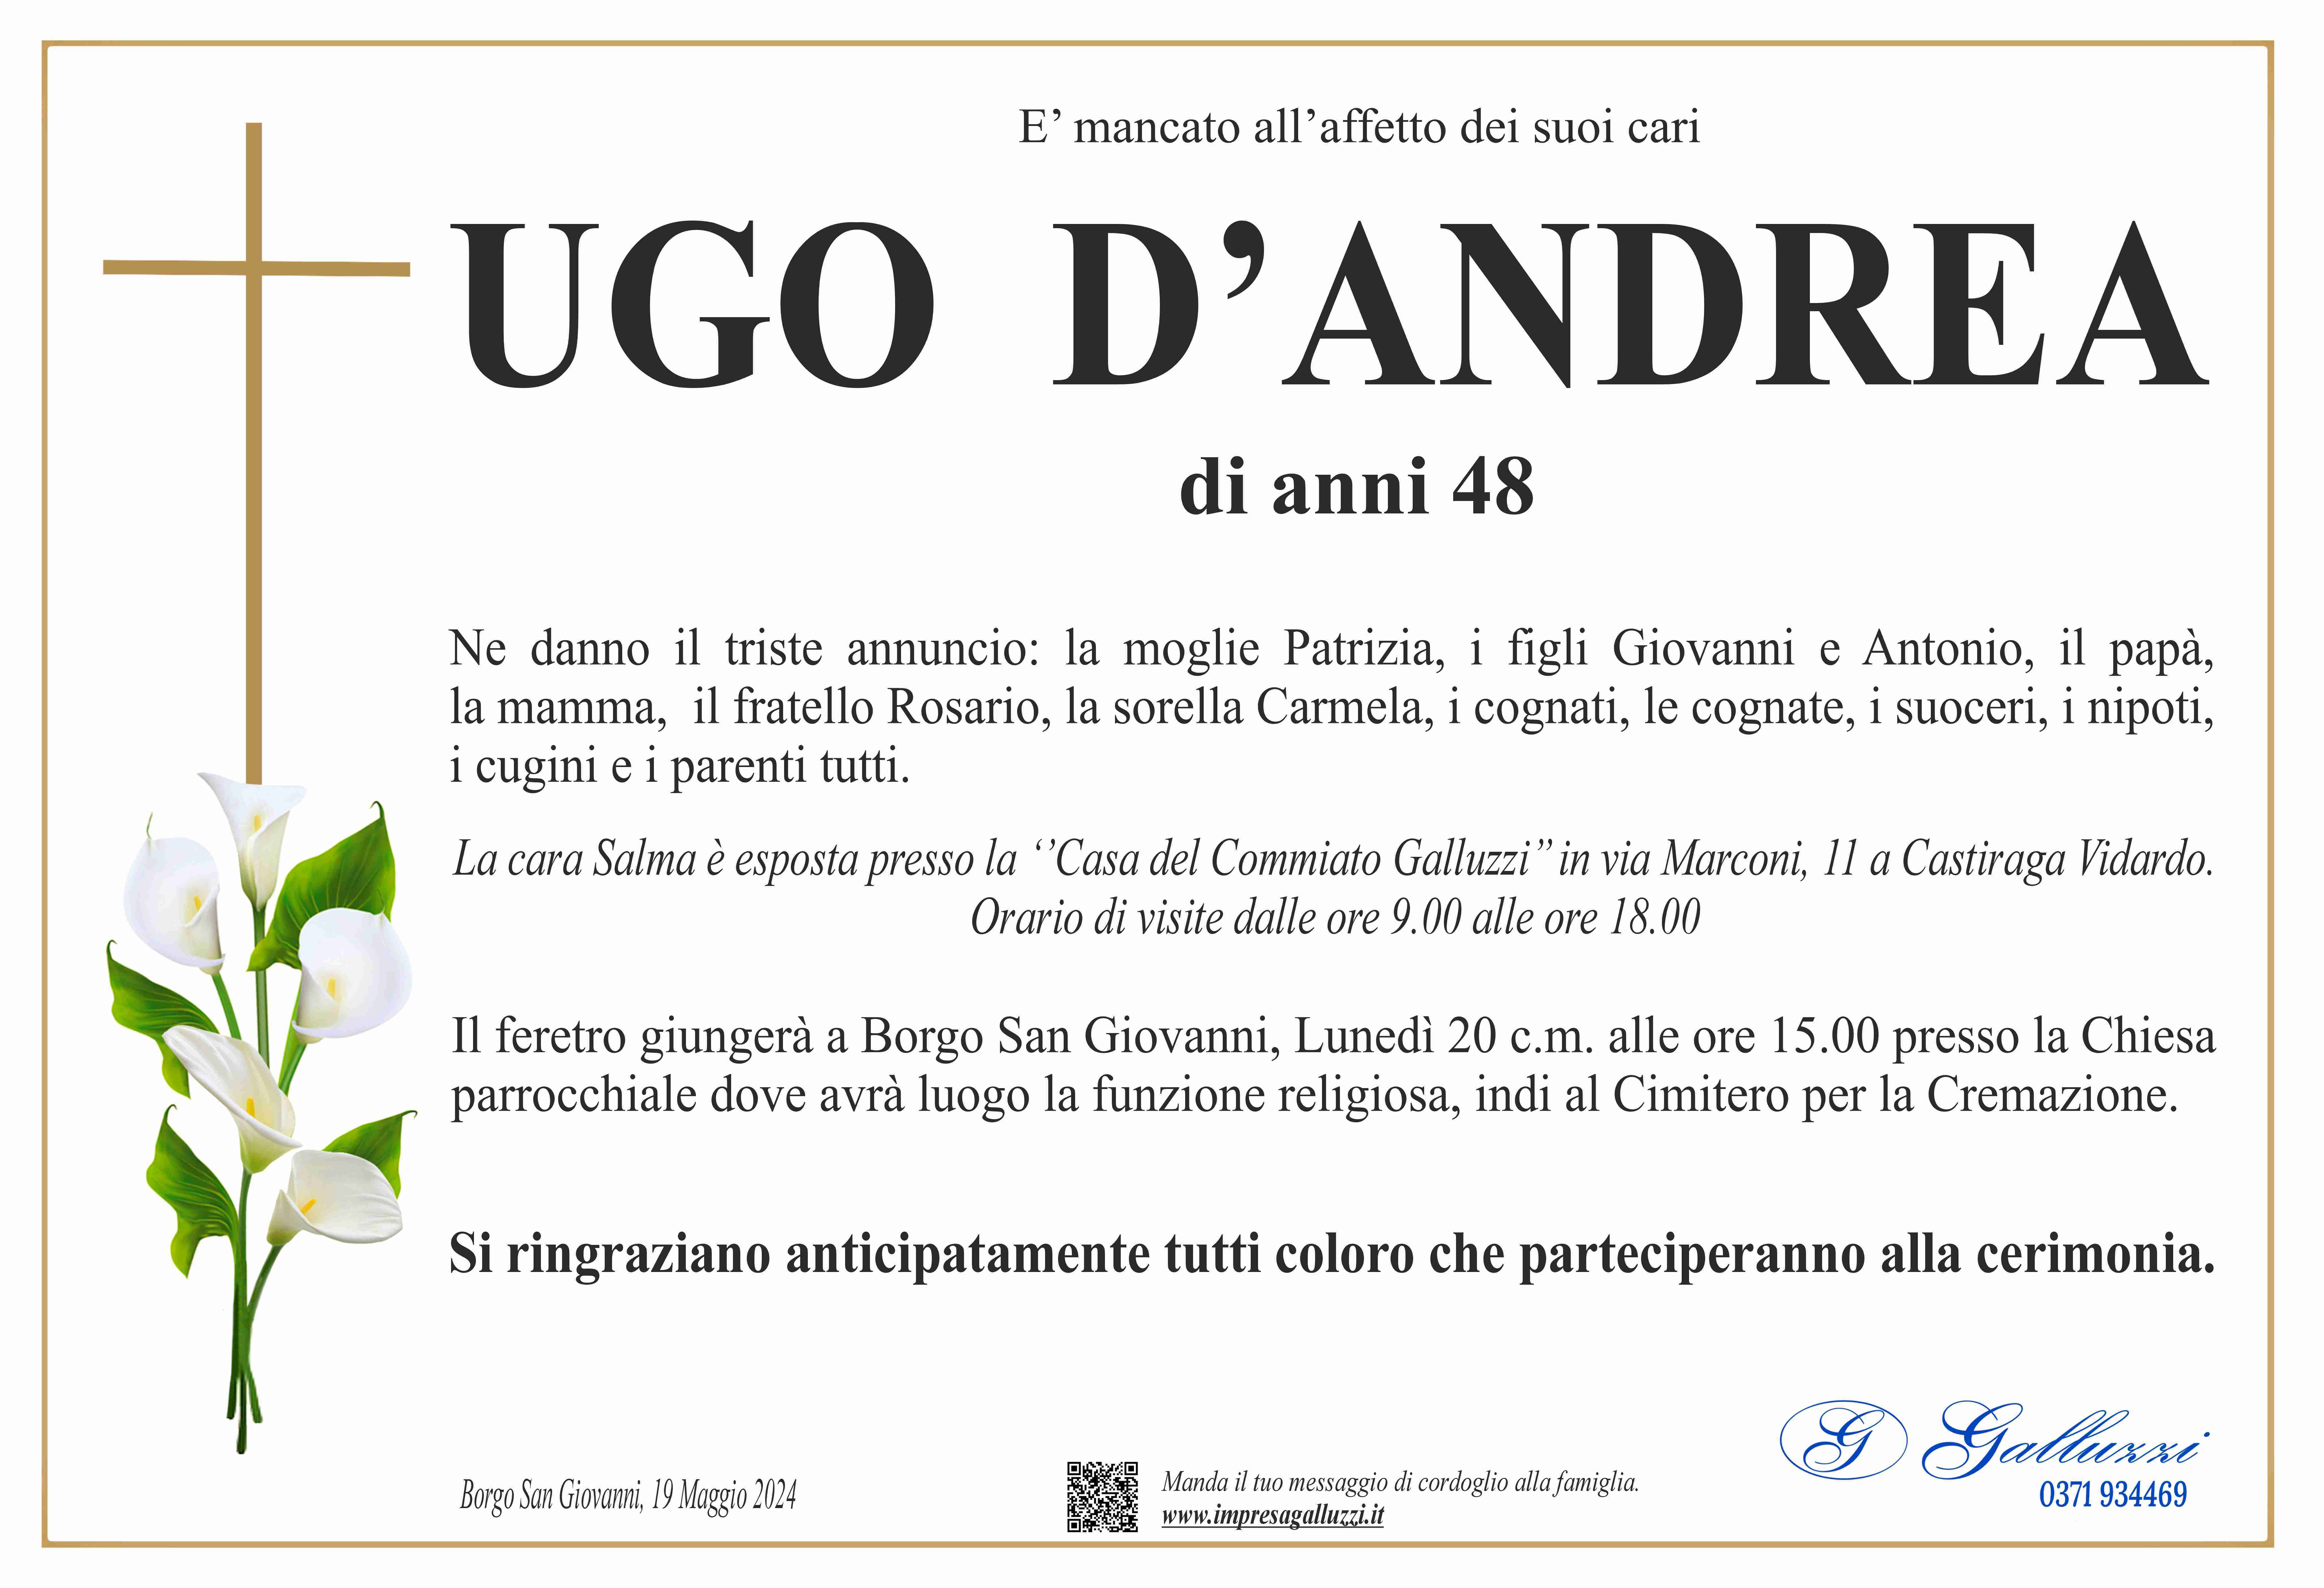 Ugo D'Andrea